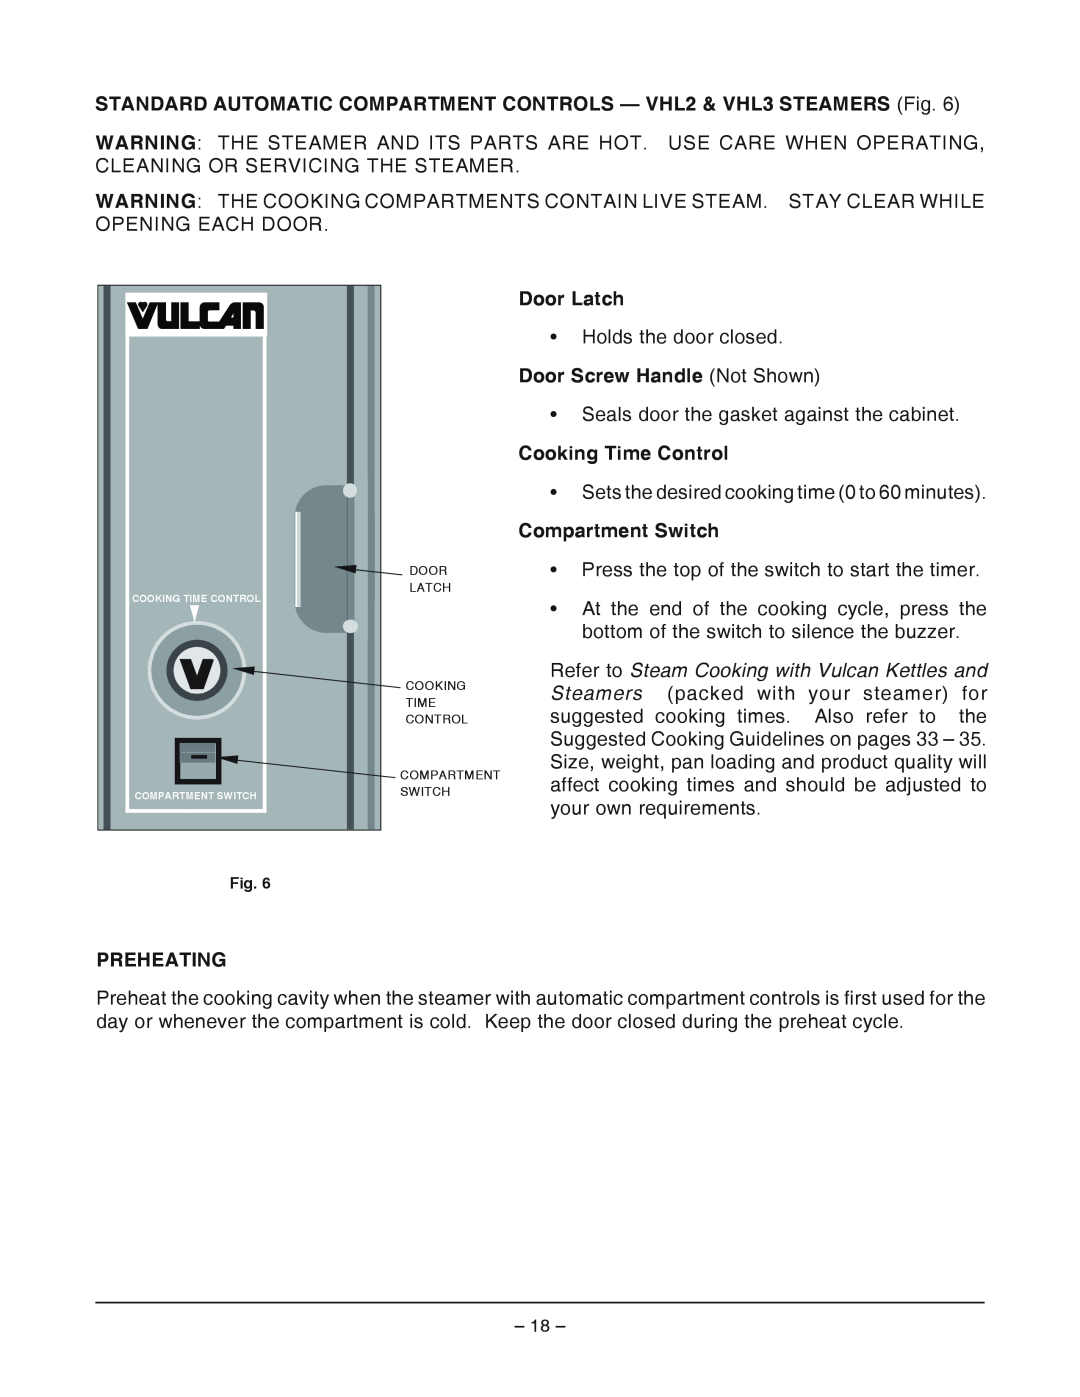 Vulcan-Hart VHL2G Door Latch, Door Screw Handle Not Shown, Cooking Time Control, Compartment Switch, Preheating 